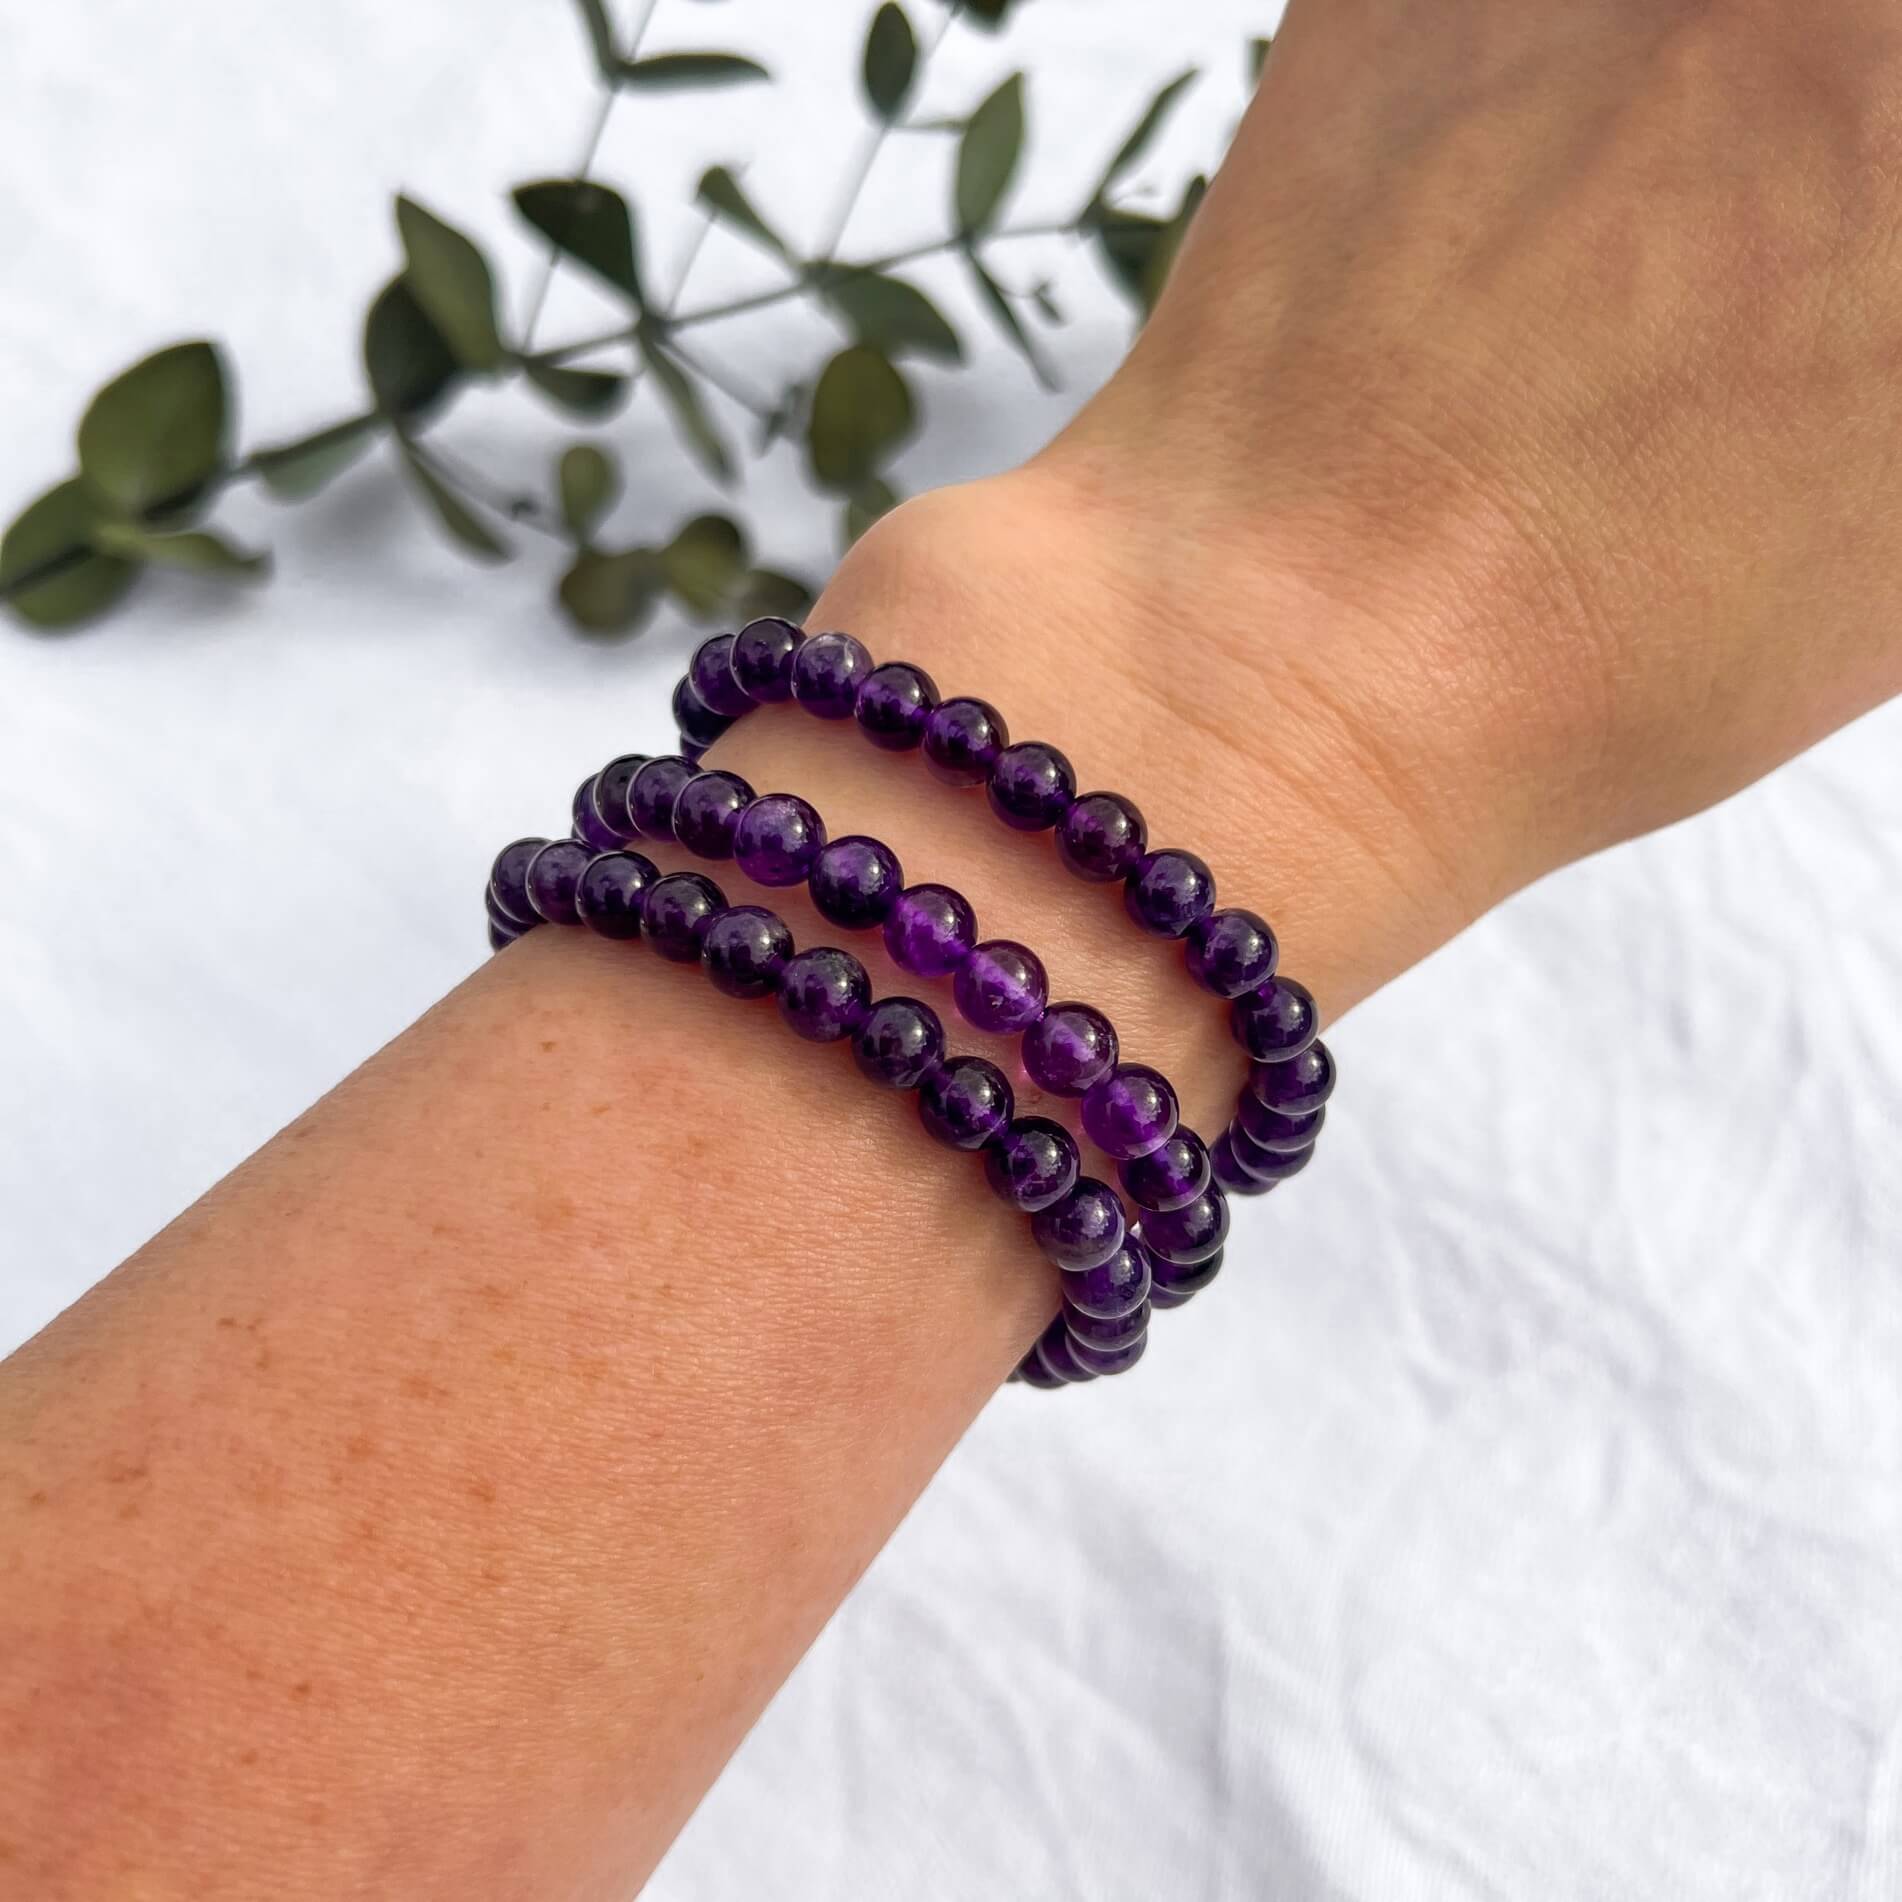 A woman's wrist wearing three bright purple amethyst crystal bead bracelets